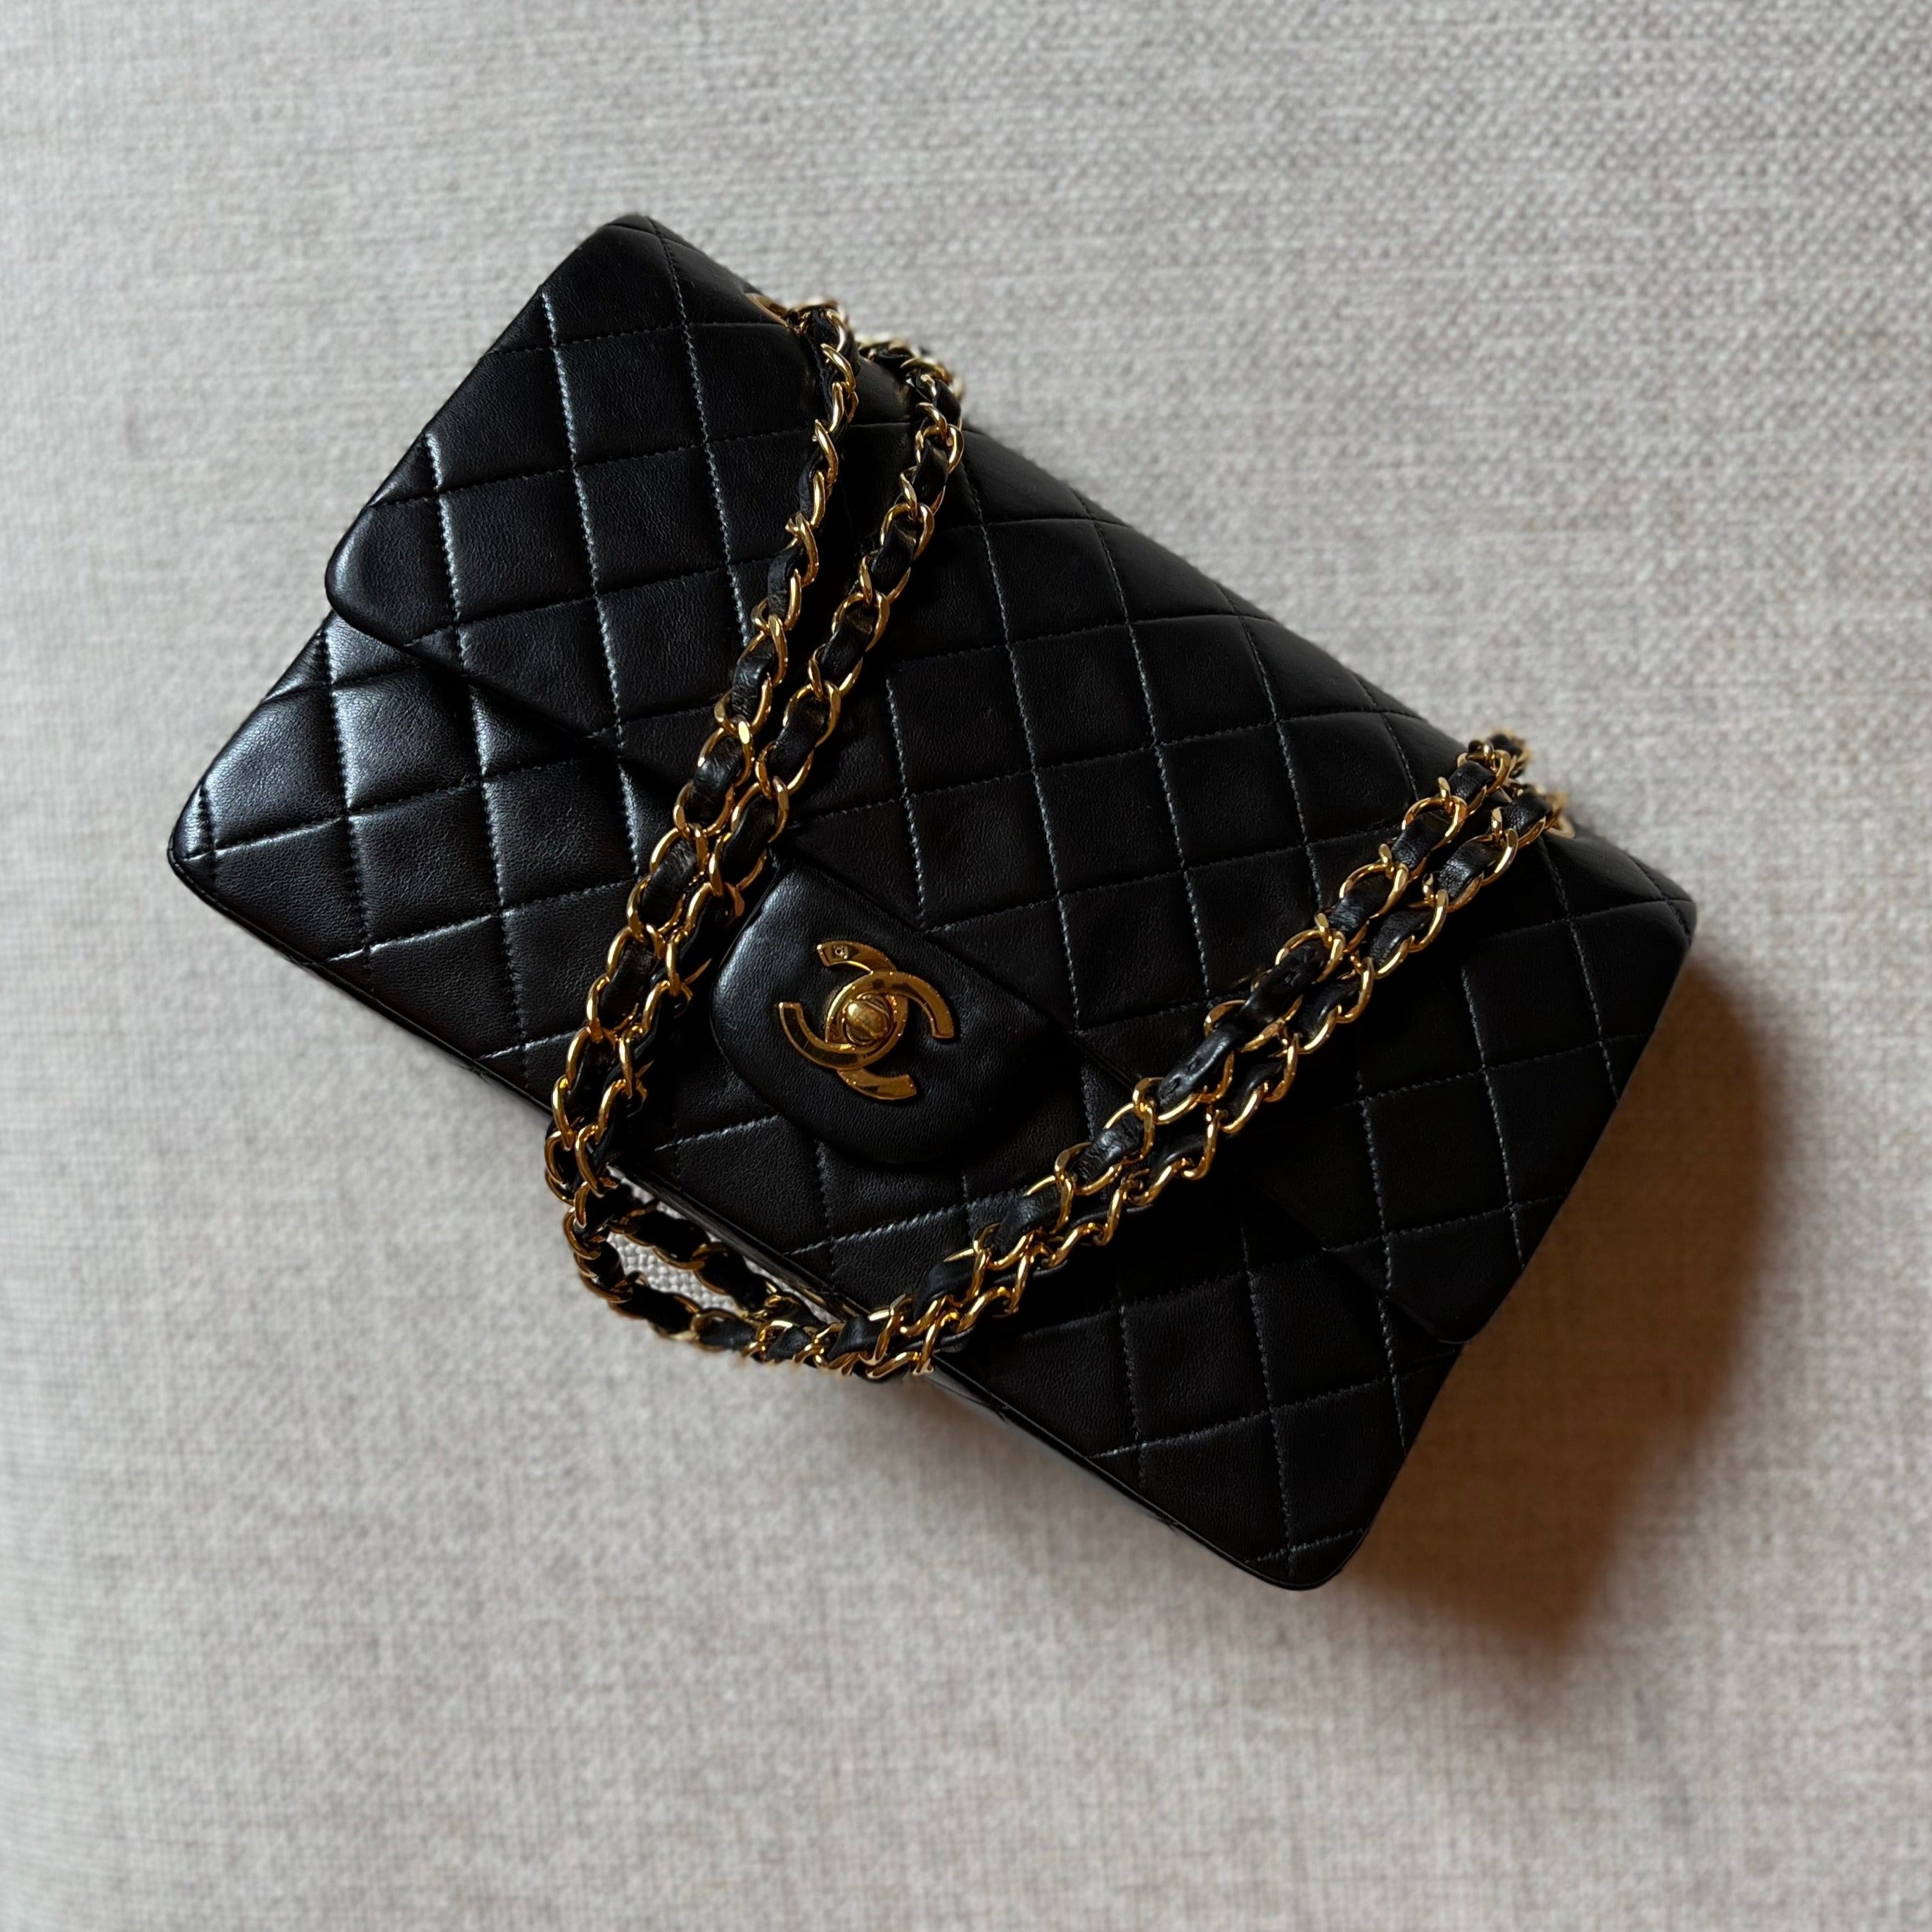 Chanel Black Lambskin Leather Medium Classic Double Flap Shoulder Bag Chanel